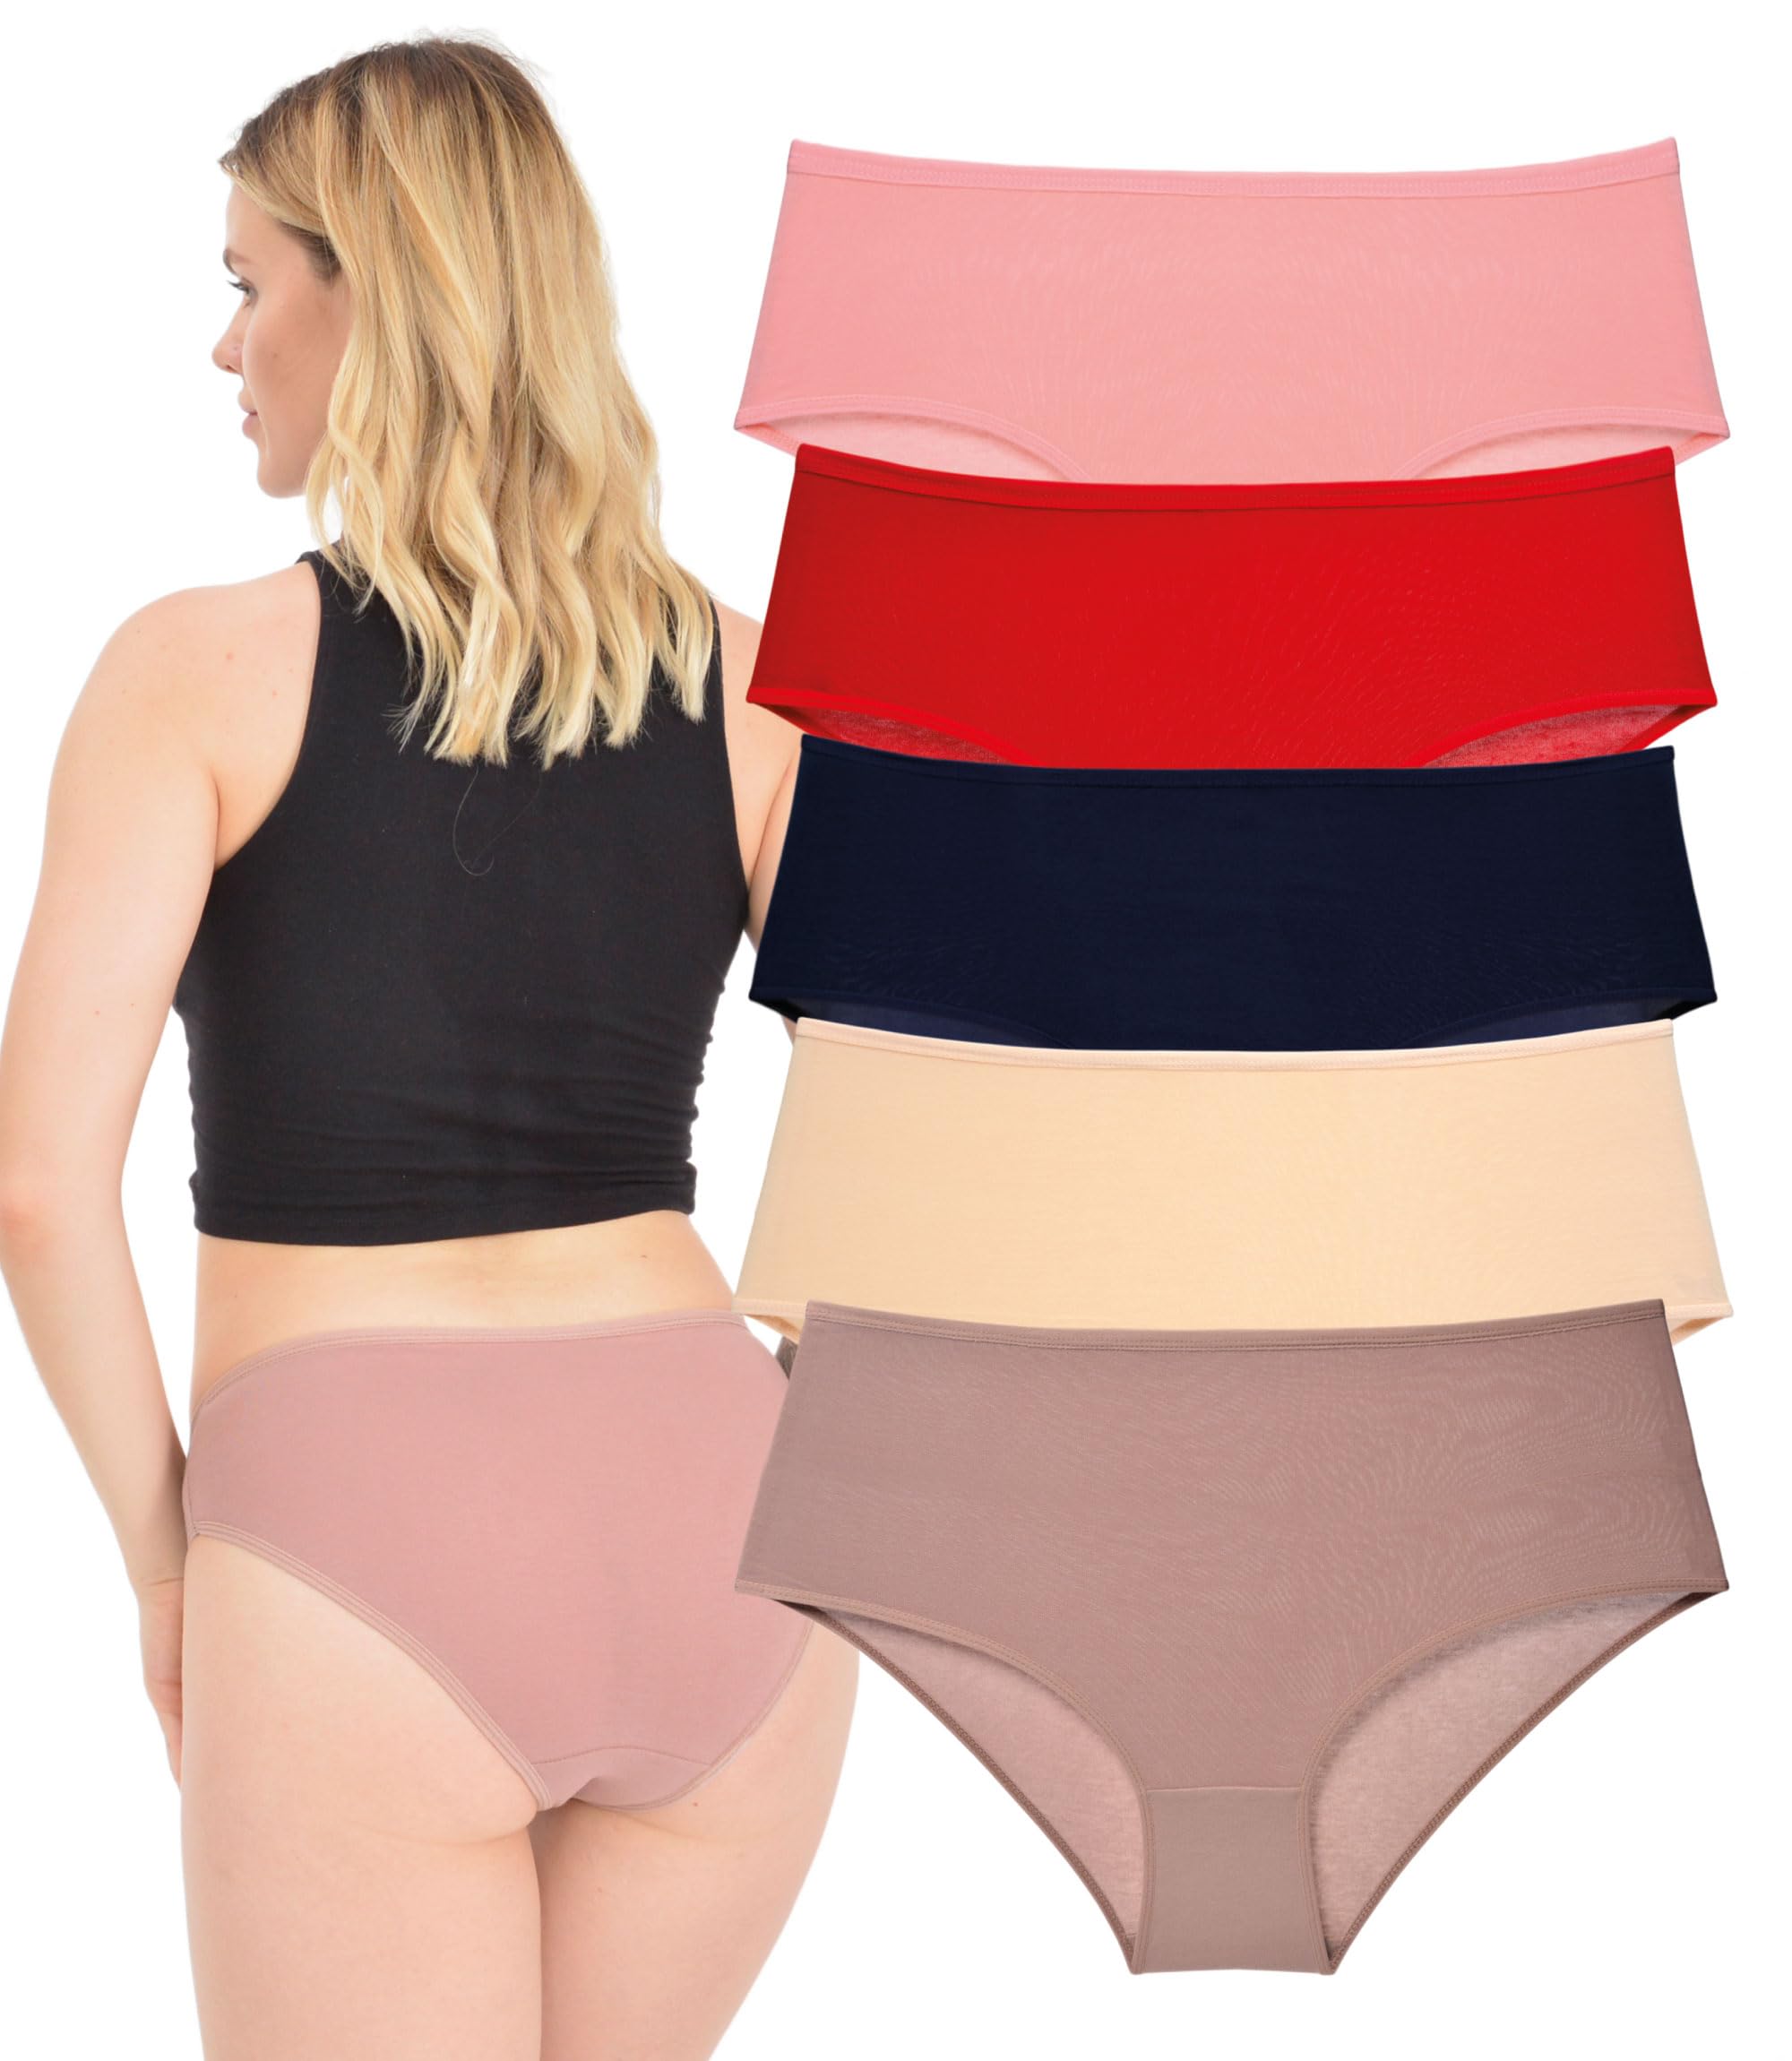 LadyMelex Women's Briefs Oversize (3XL-4XL-5XL-6XL) Briefs Cotton Underwear Mid-Rise Panties, Plus Size Pack of 5